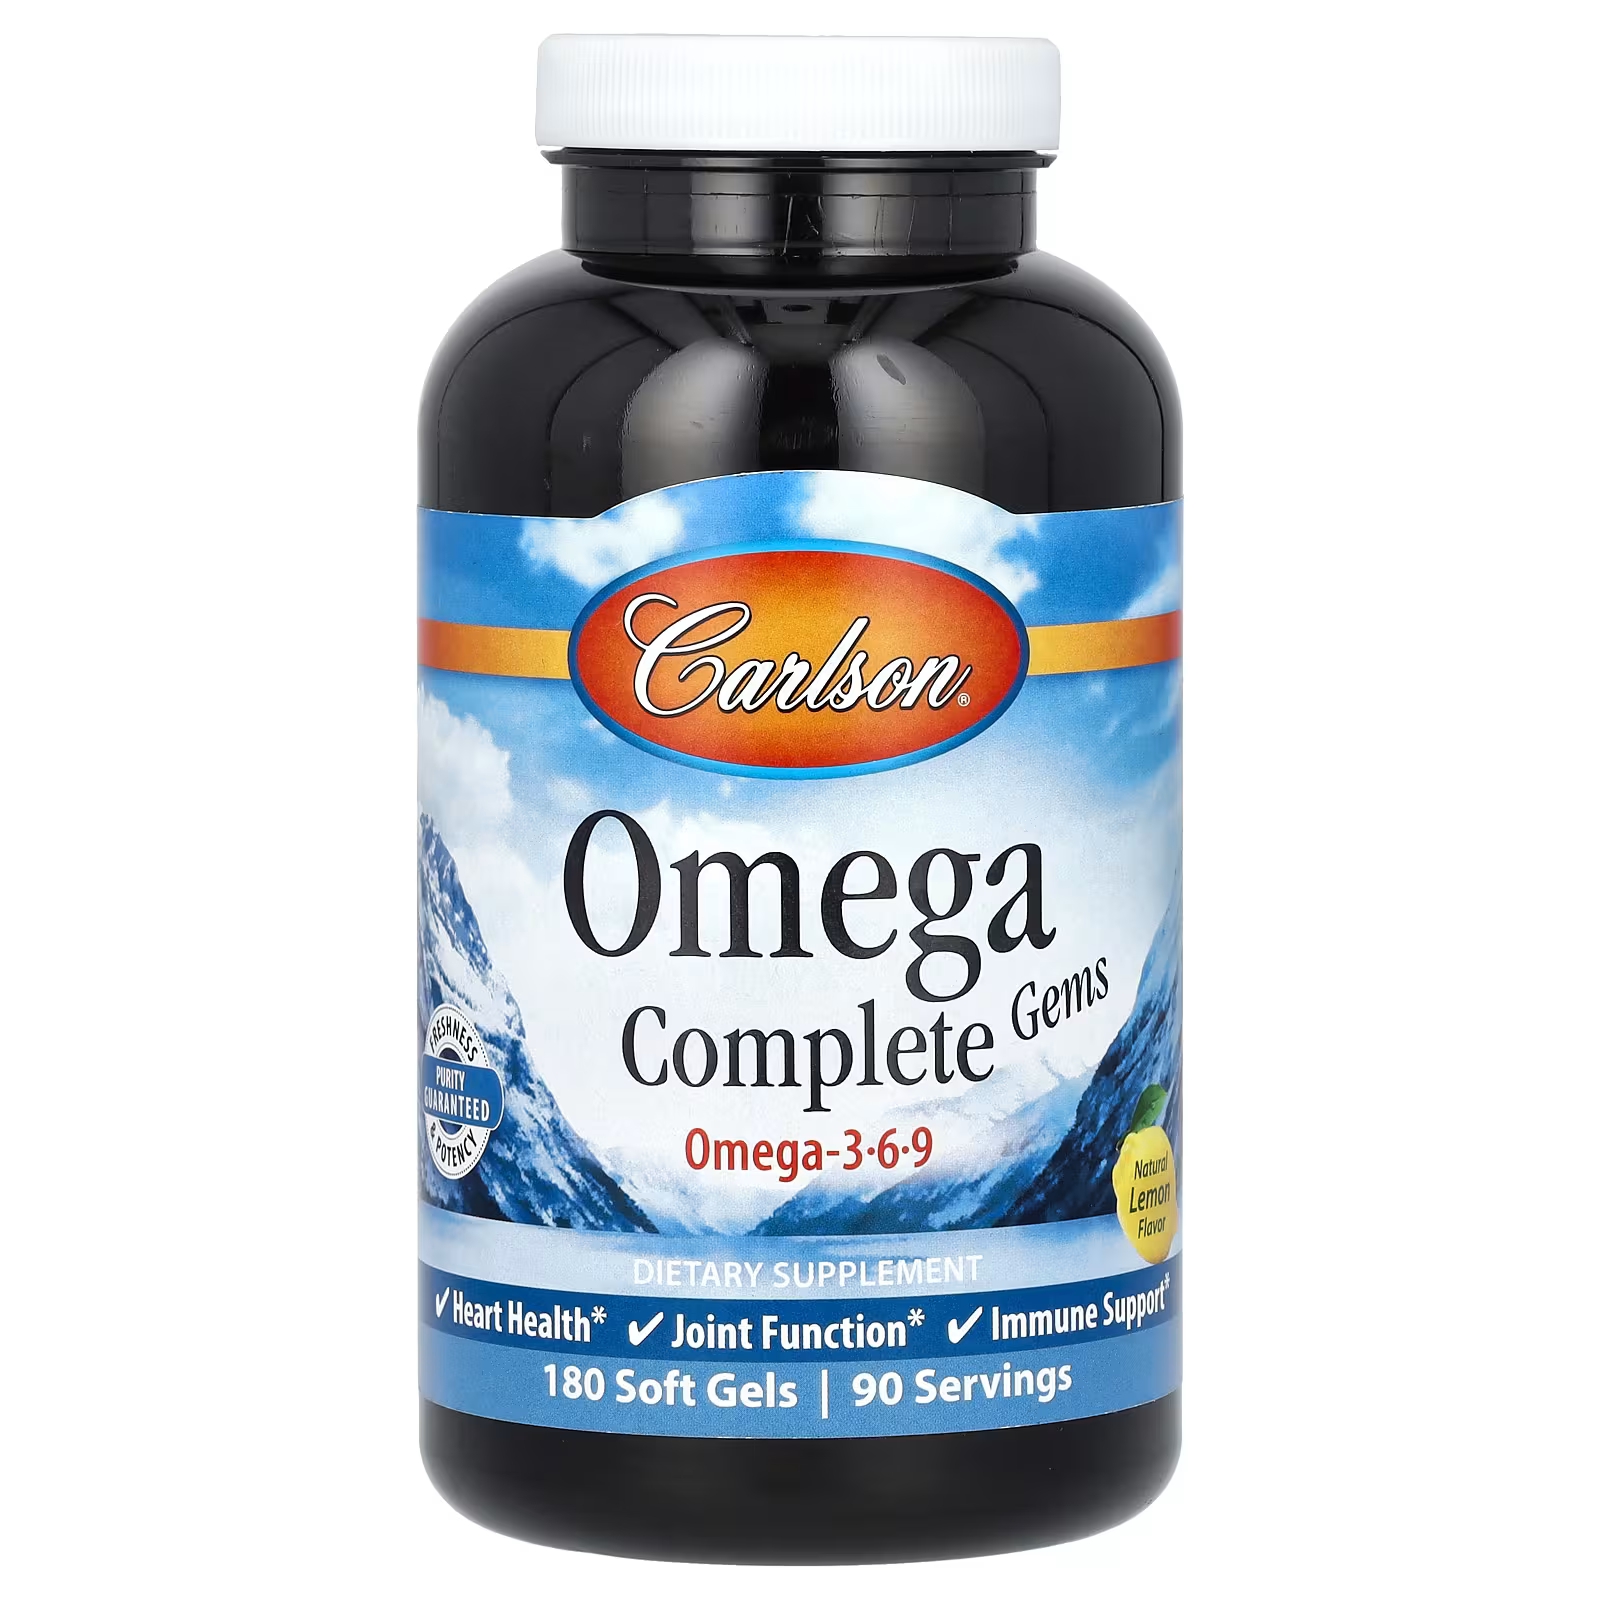 Carlson Omega Complete Gems Omega-3-6-9 Натуральный лимон 180 мягких таблеток carlson labs maximum omega 2000 натуральный лимон 1 000 мг 180 мягких таблеток